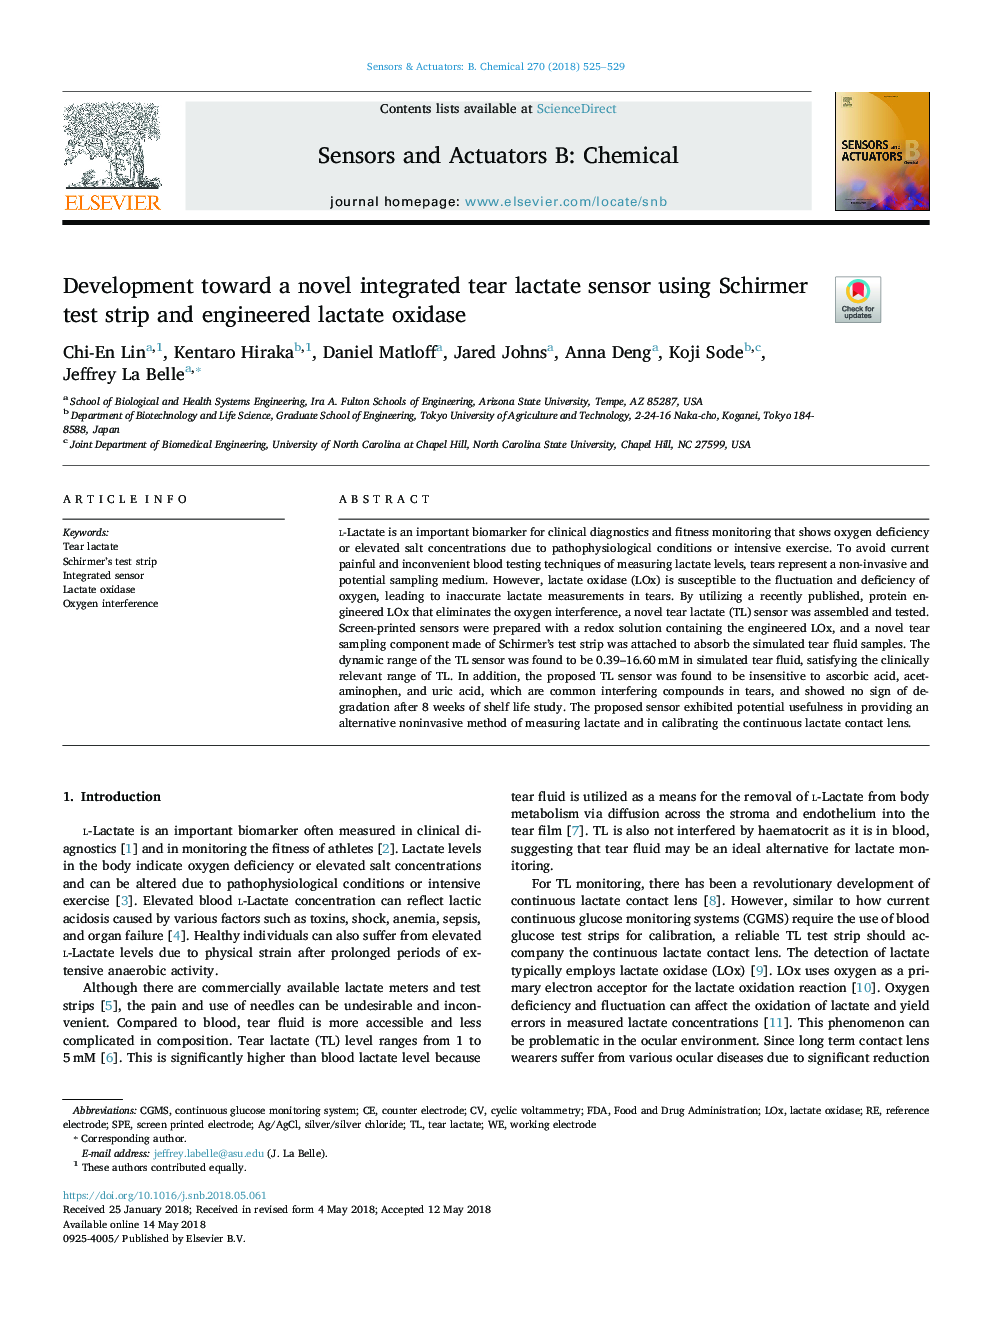 Development toward a novel integrated tear lactate sensor using Schirmer test strip and engineered lactate oxidase